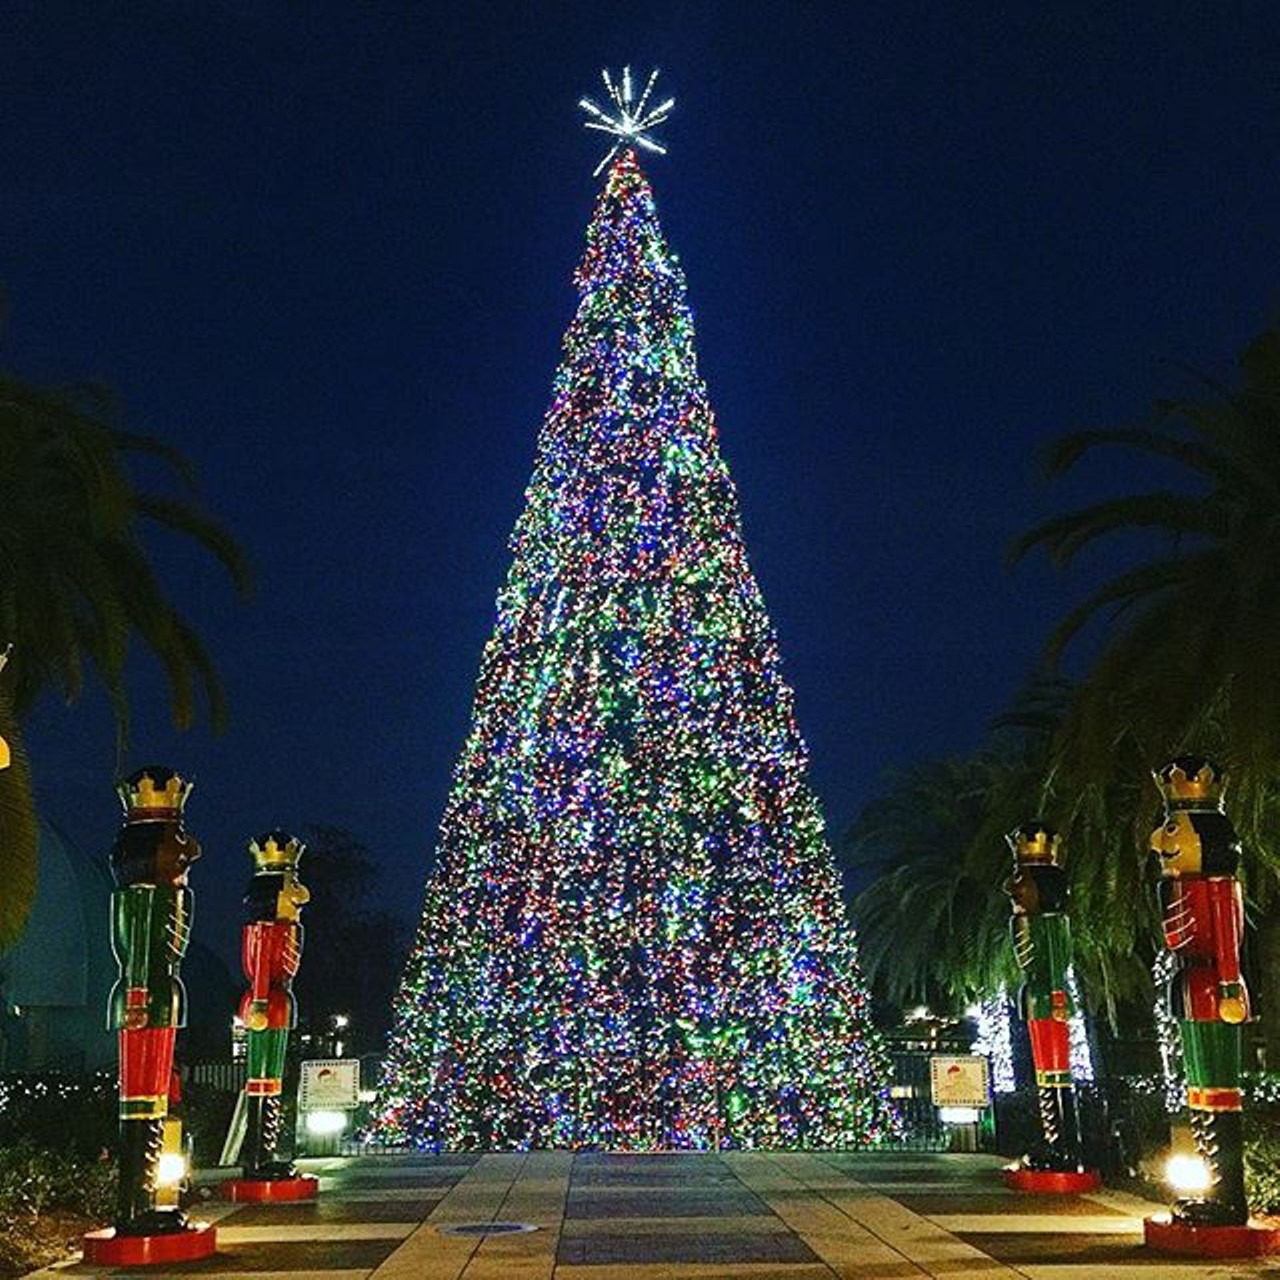 Instagram user aparisianinamerica snapped this greta pic of the Christmas tree at Lake Eola.